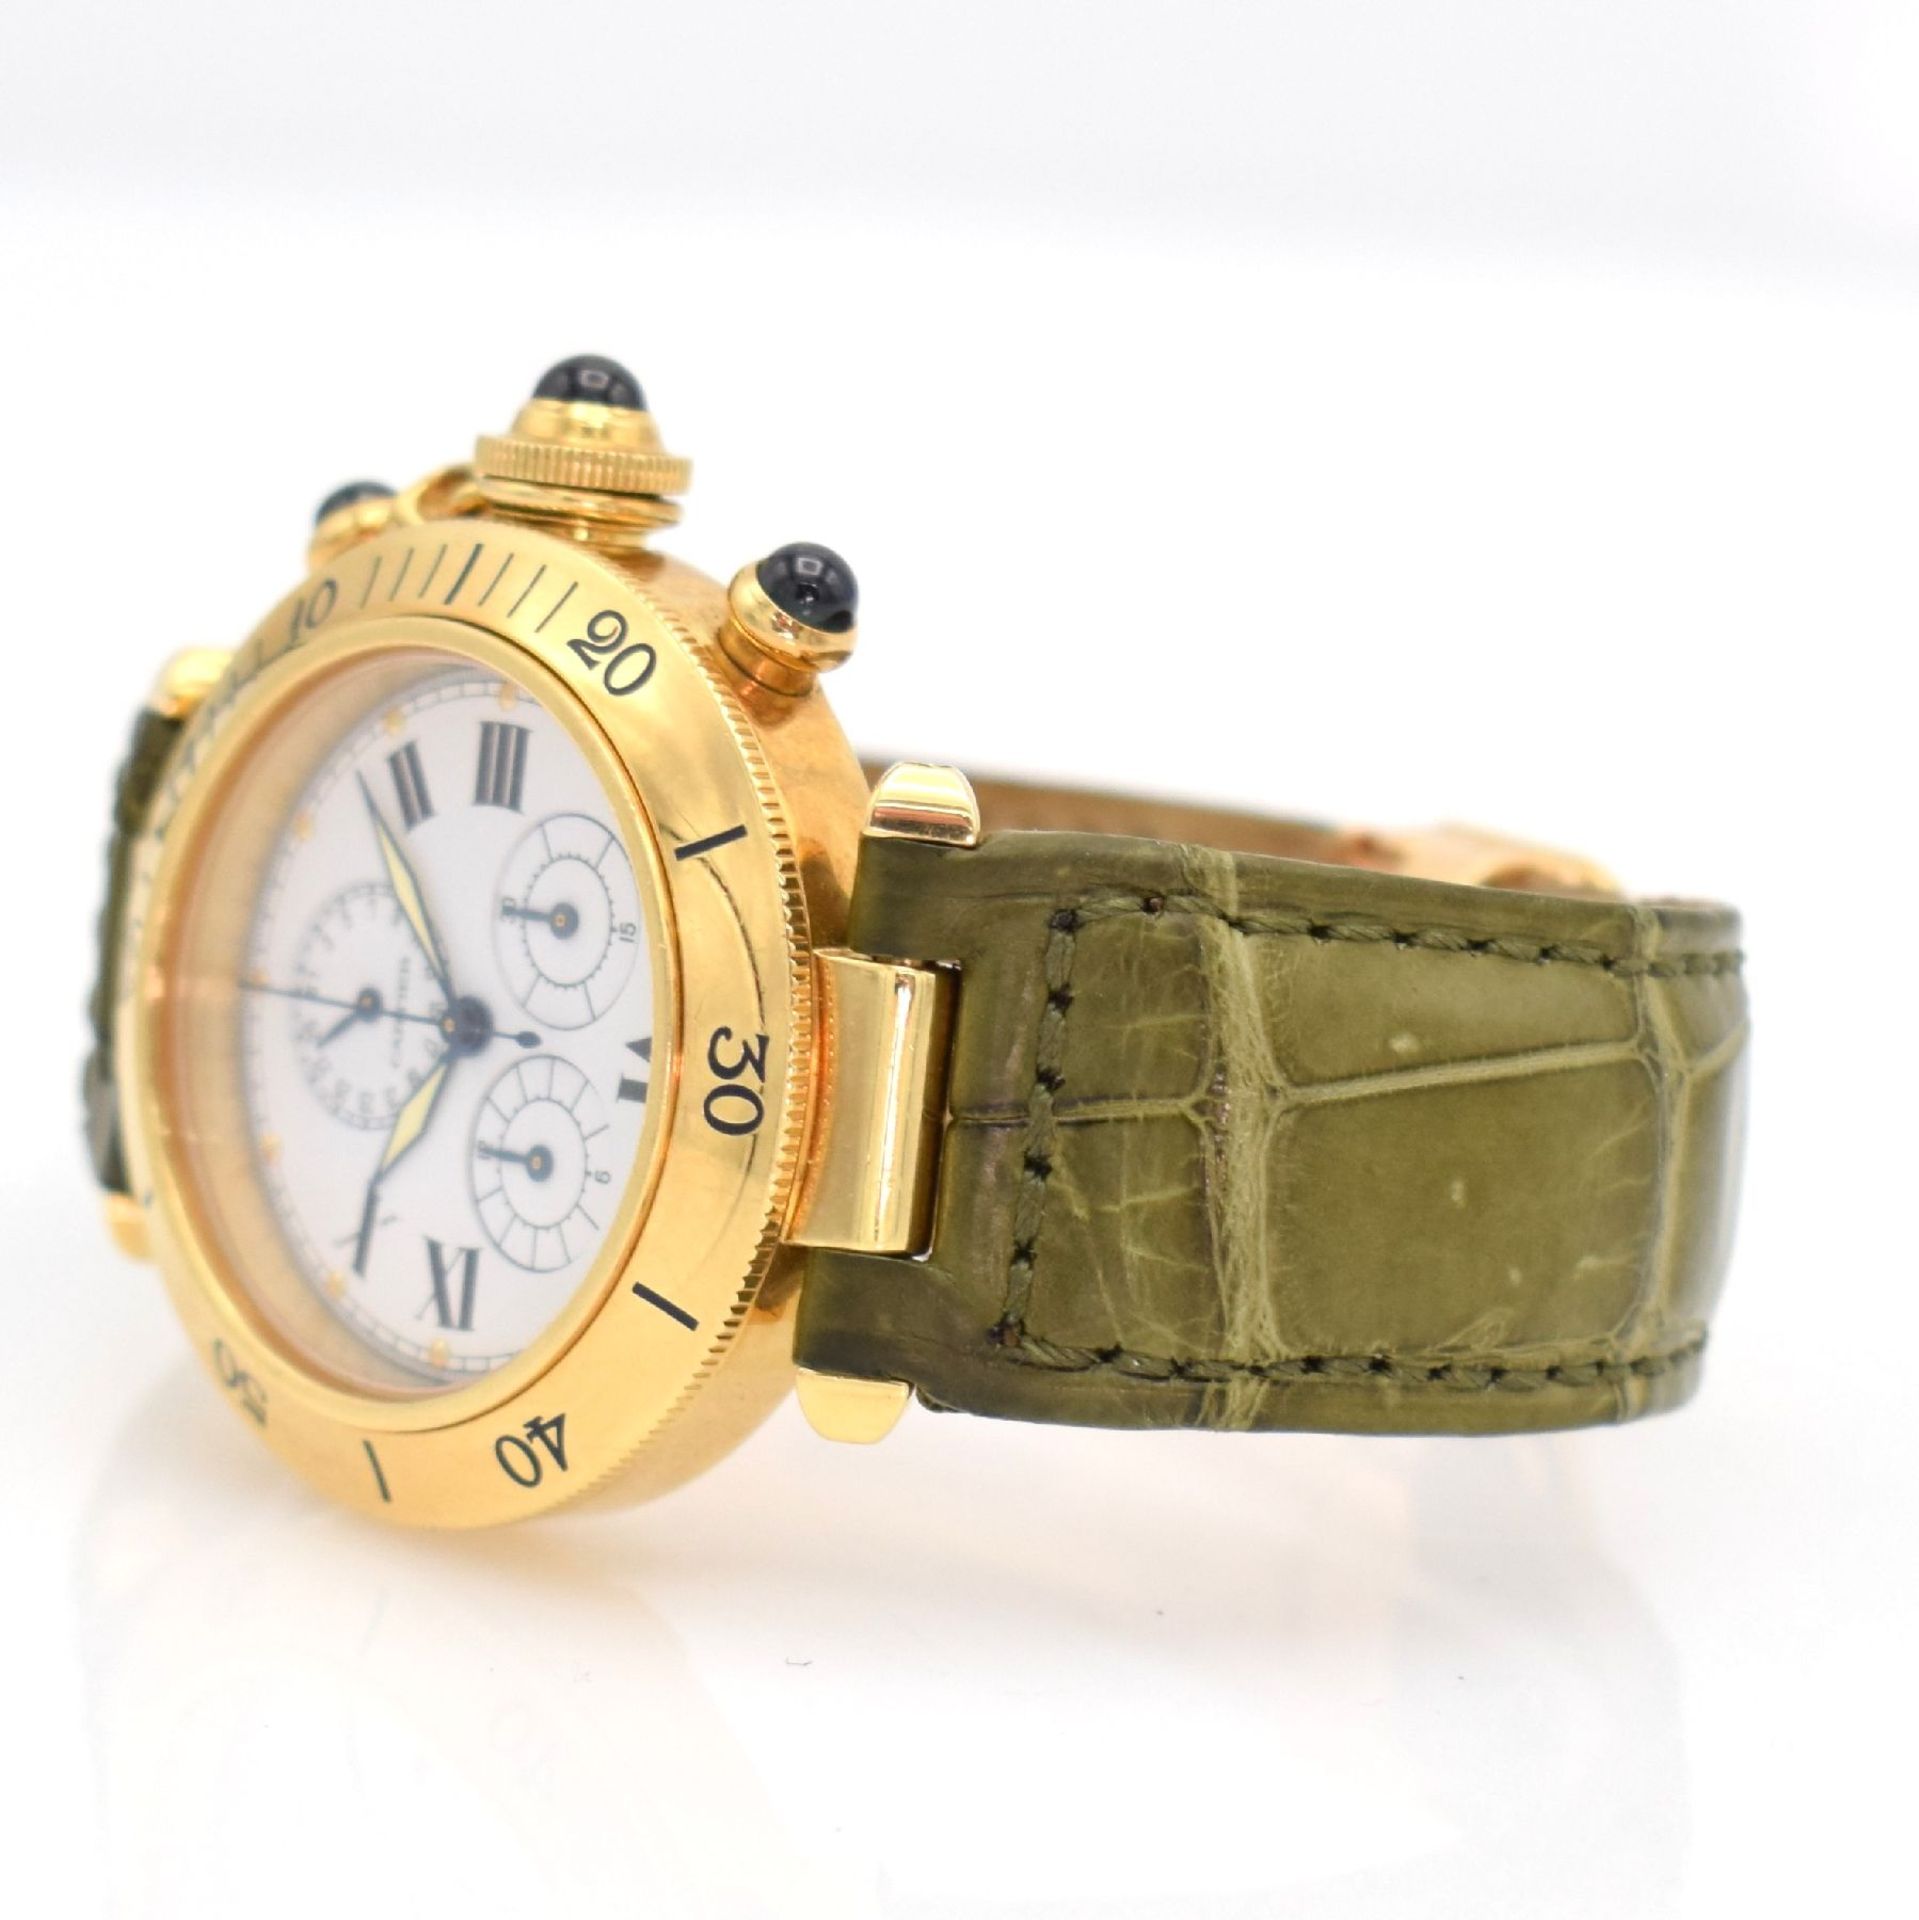 CARTIER Armbandchronograph Serie Pasha in GG 750/000, Schweiz um 2000, Ref. 1353.1, quarz, - Bild 5 aus 9